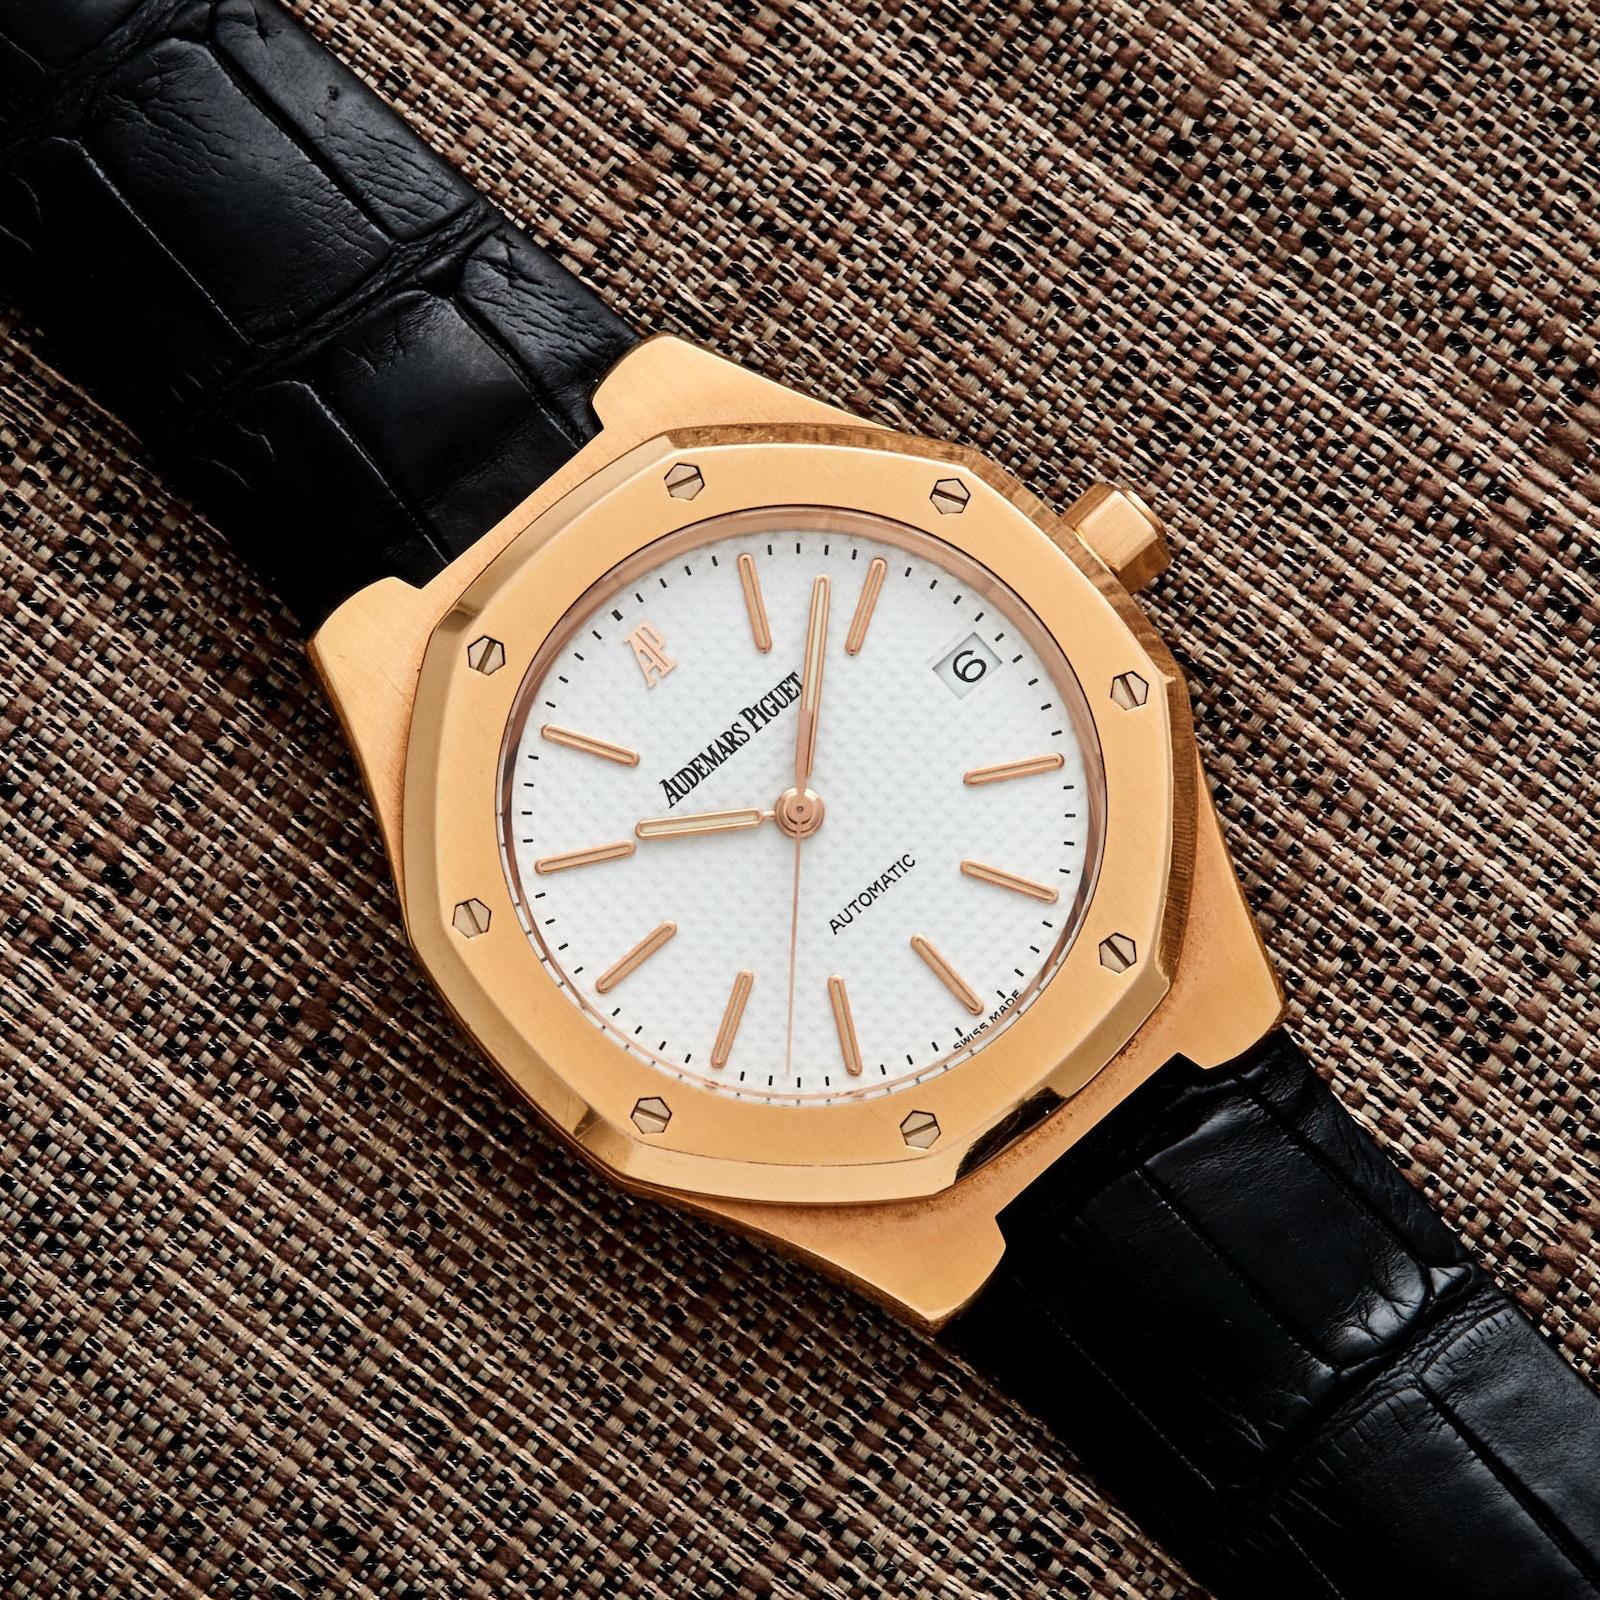 Royal Oak Offshore Certified Pre Owned Watch in Gold - Audemars